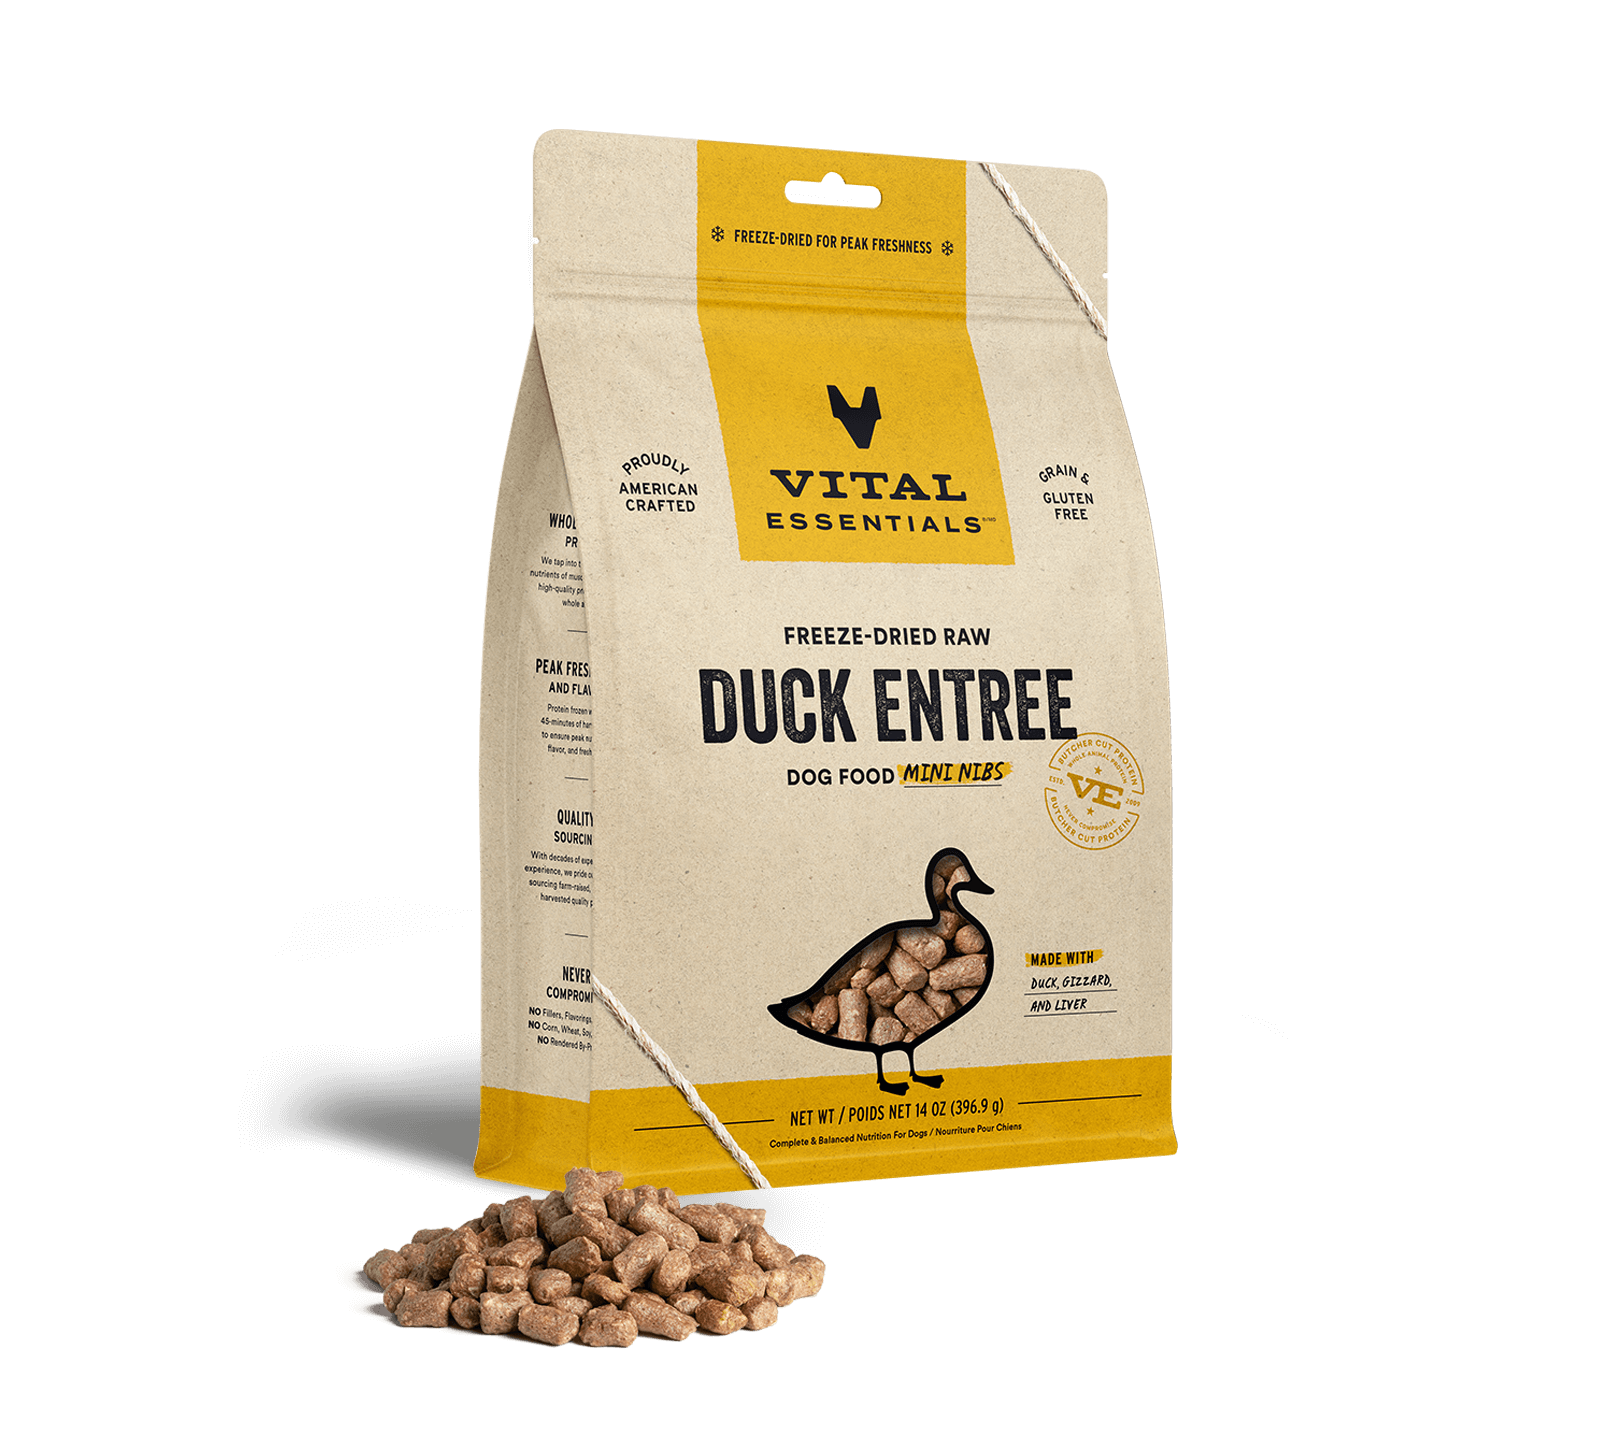 Vital Essentials Freeze-Dried Raw Duck Entree Dog Food Mini Nibs, 14 oz - Items on Sale Now